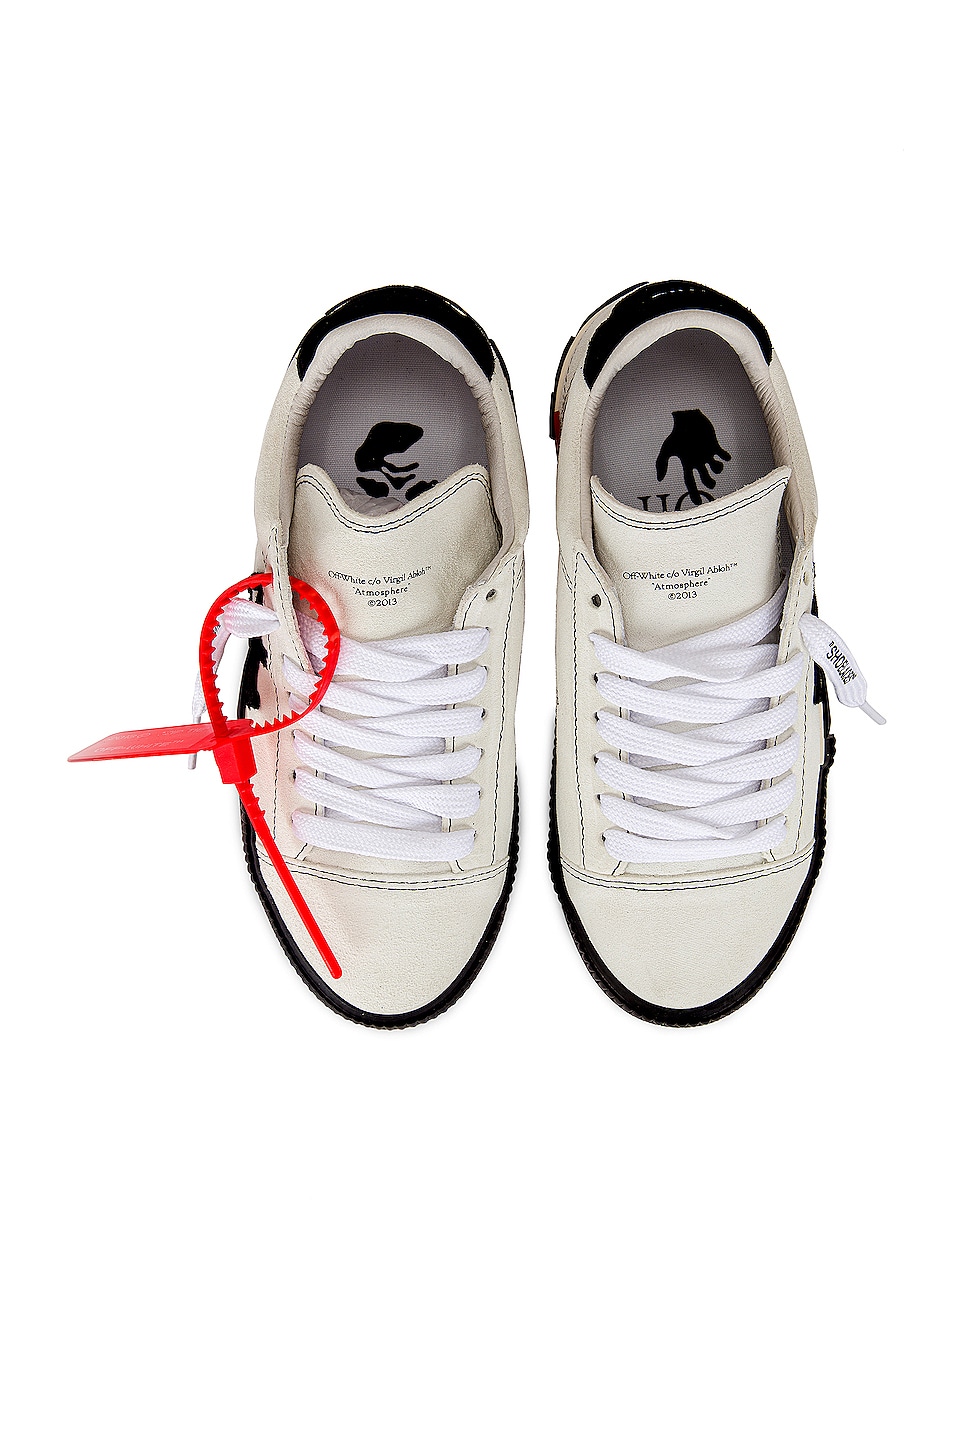 OFF-WHITE New Arrow Low Vulcanized Sneaker in White & Black | FWRD